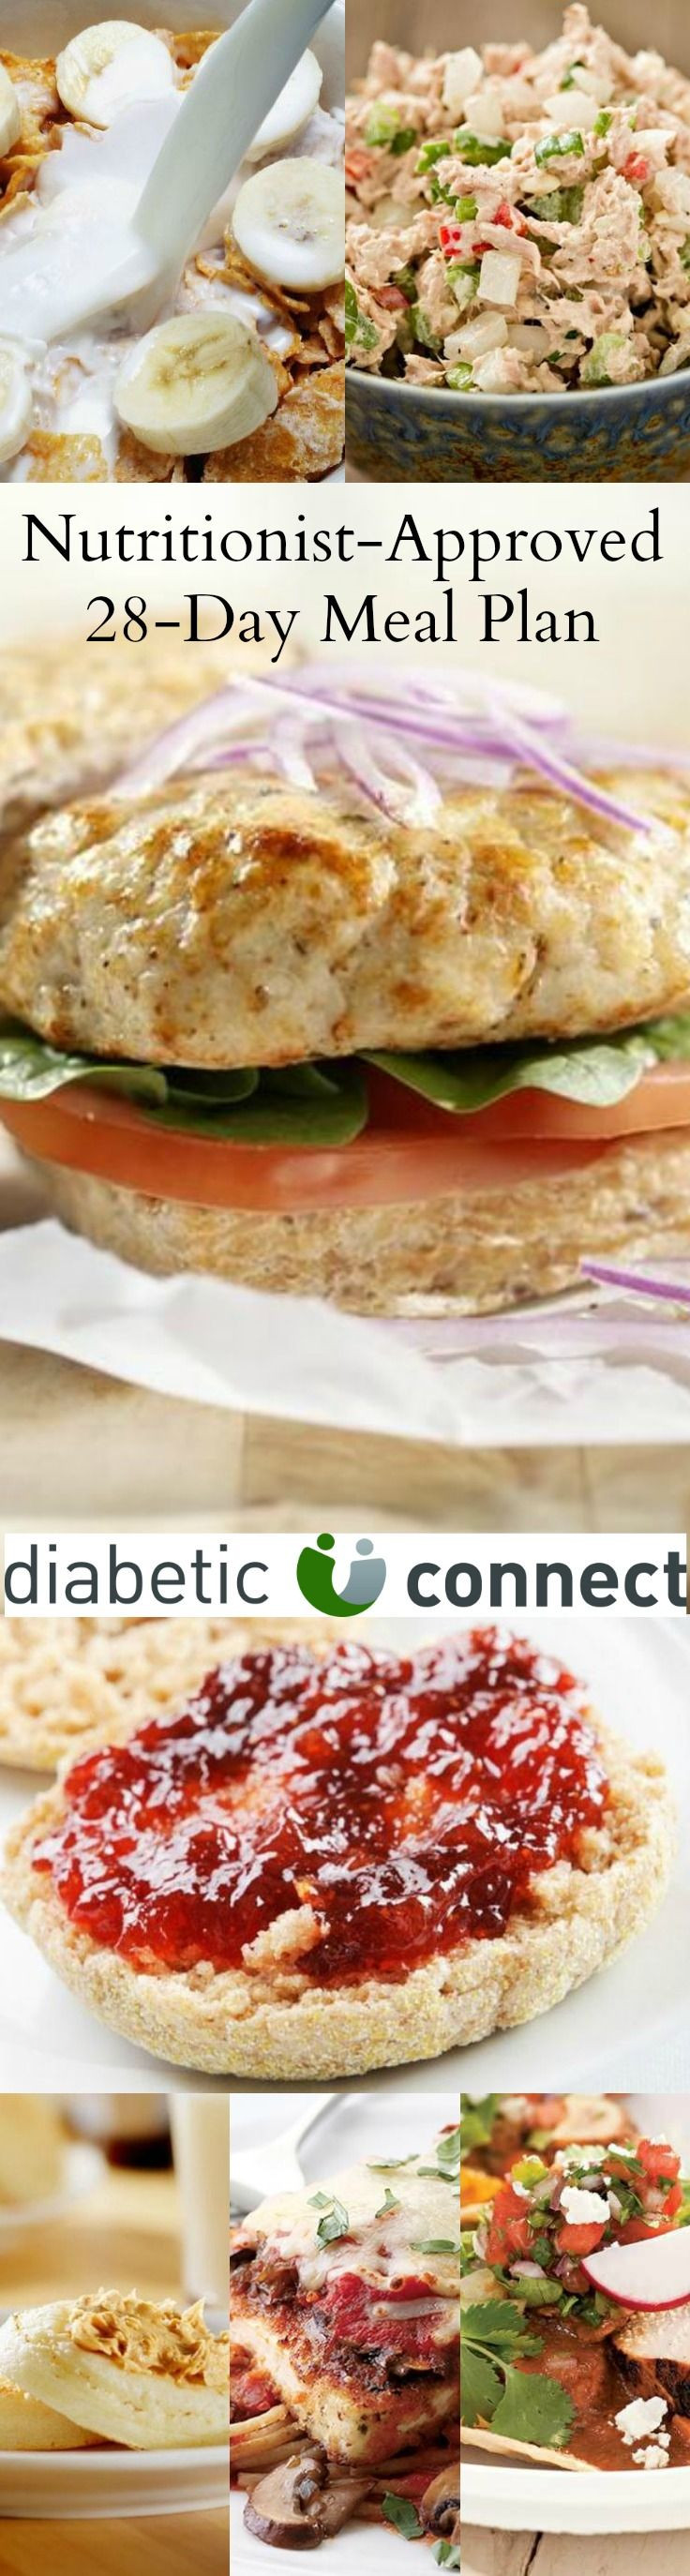 Pre Diabetic Diet Recipes
 25 best ideas about Diabetic meal plan on Pinterest